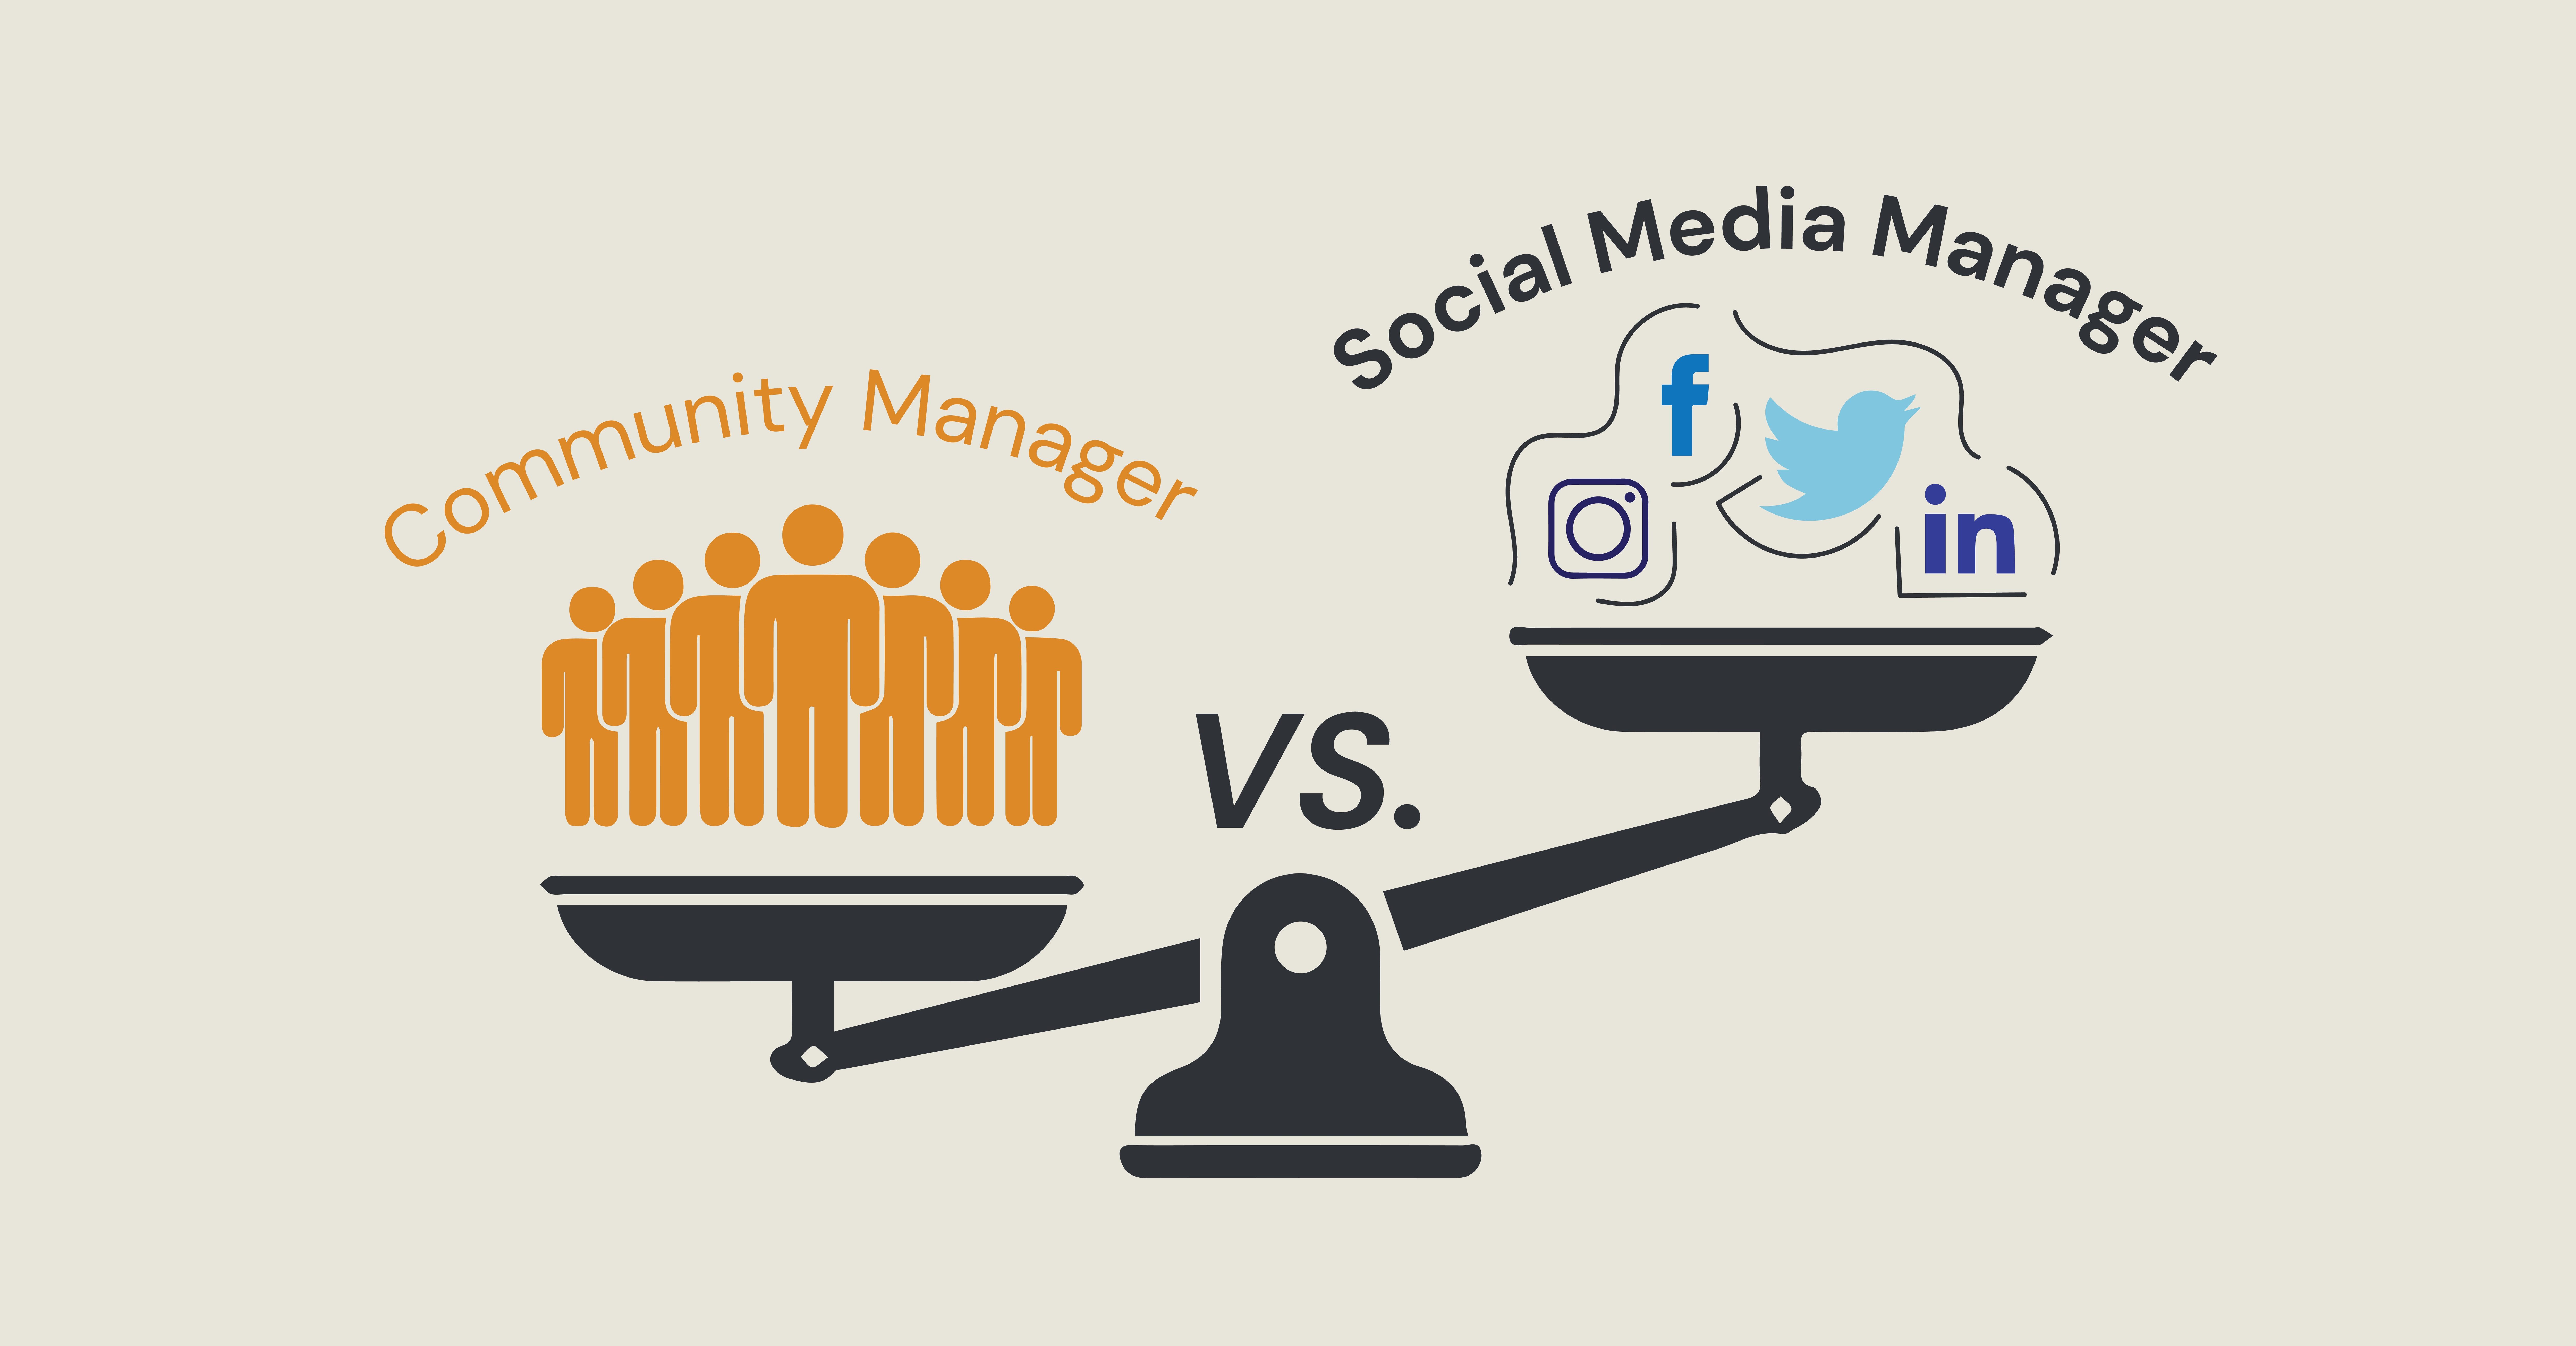 community manager vs social media manager